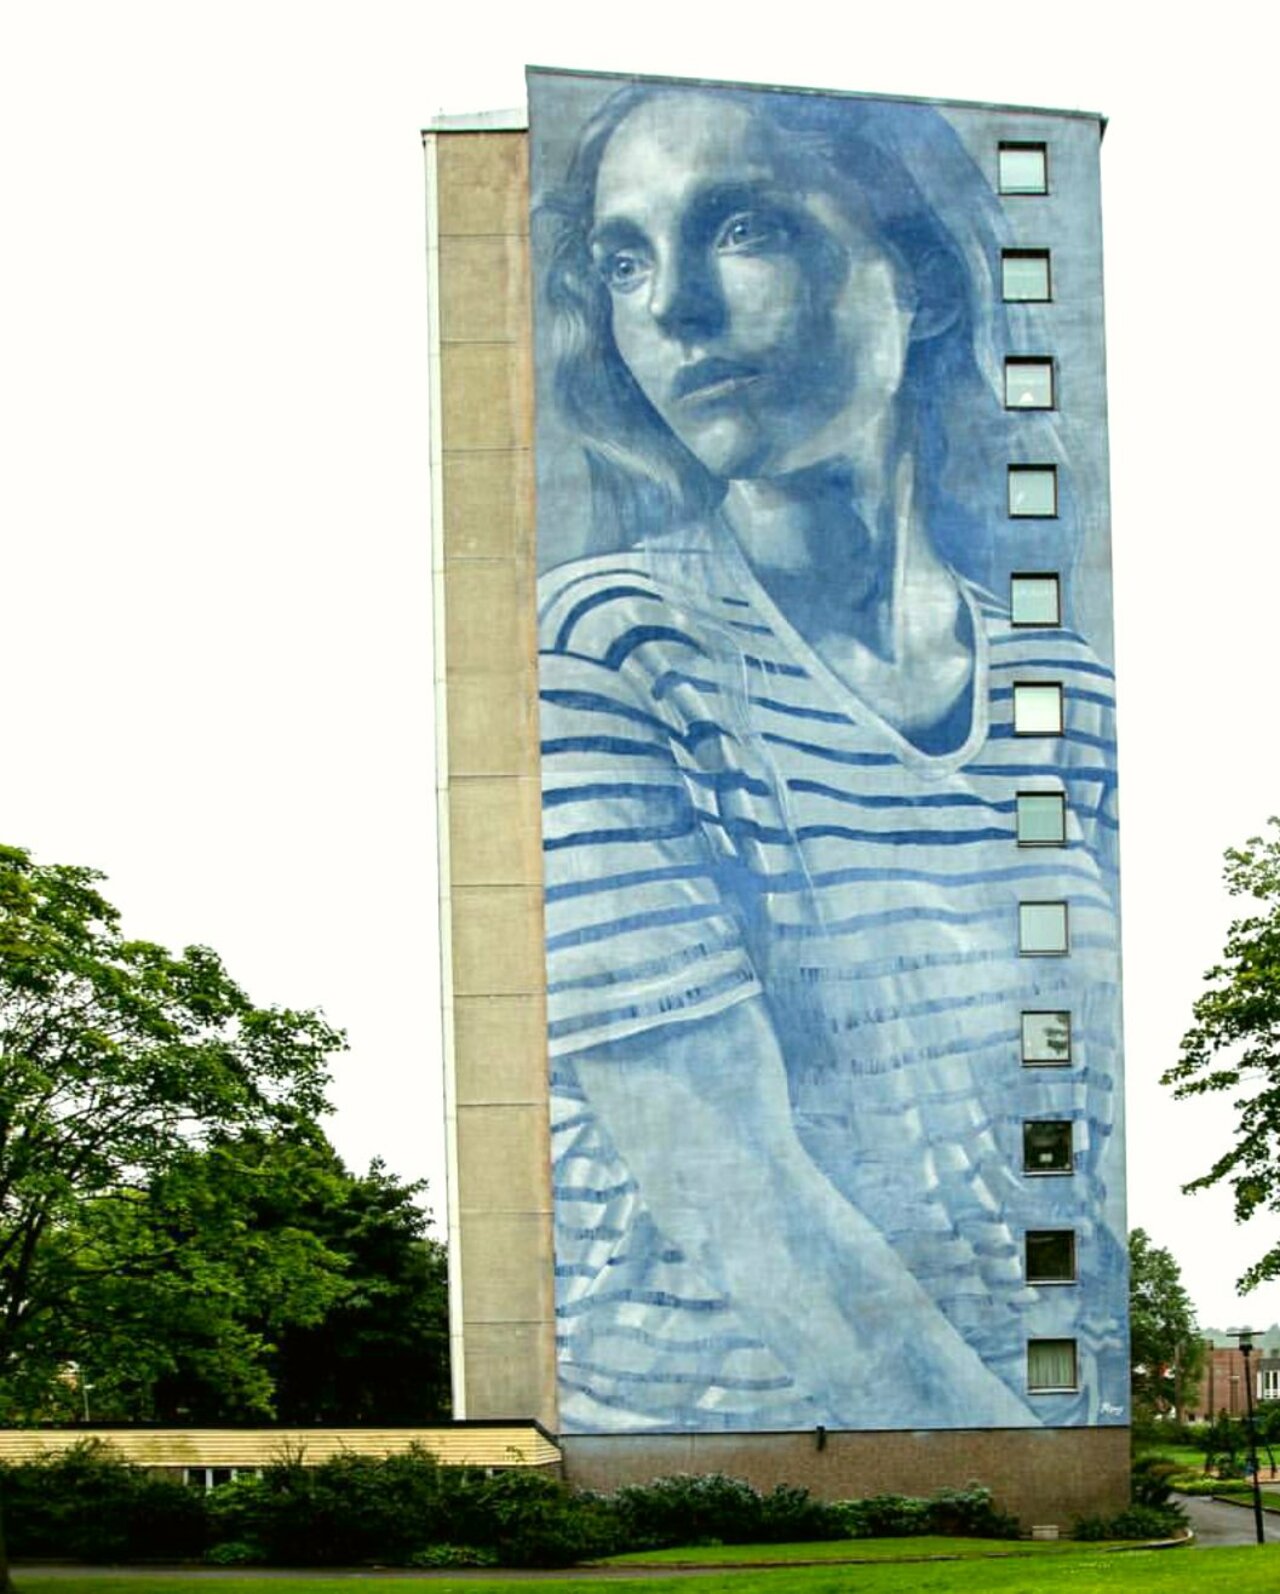 Amazing mural by #rone titled "Emma of Gothenburg" #sweden #artscape #art #contemporaryart #streetart https://t.co/p4R8rINNa6